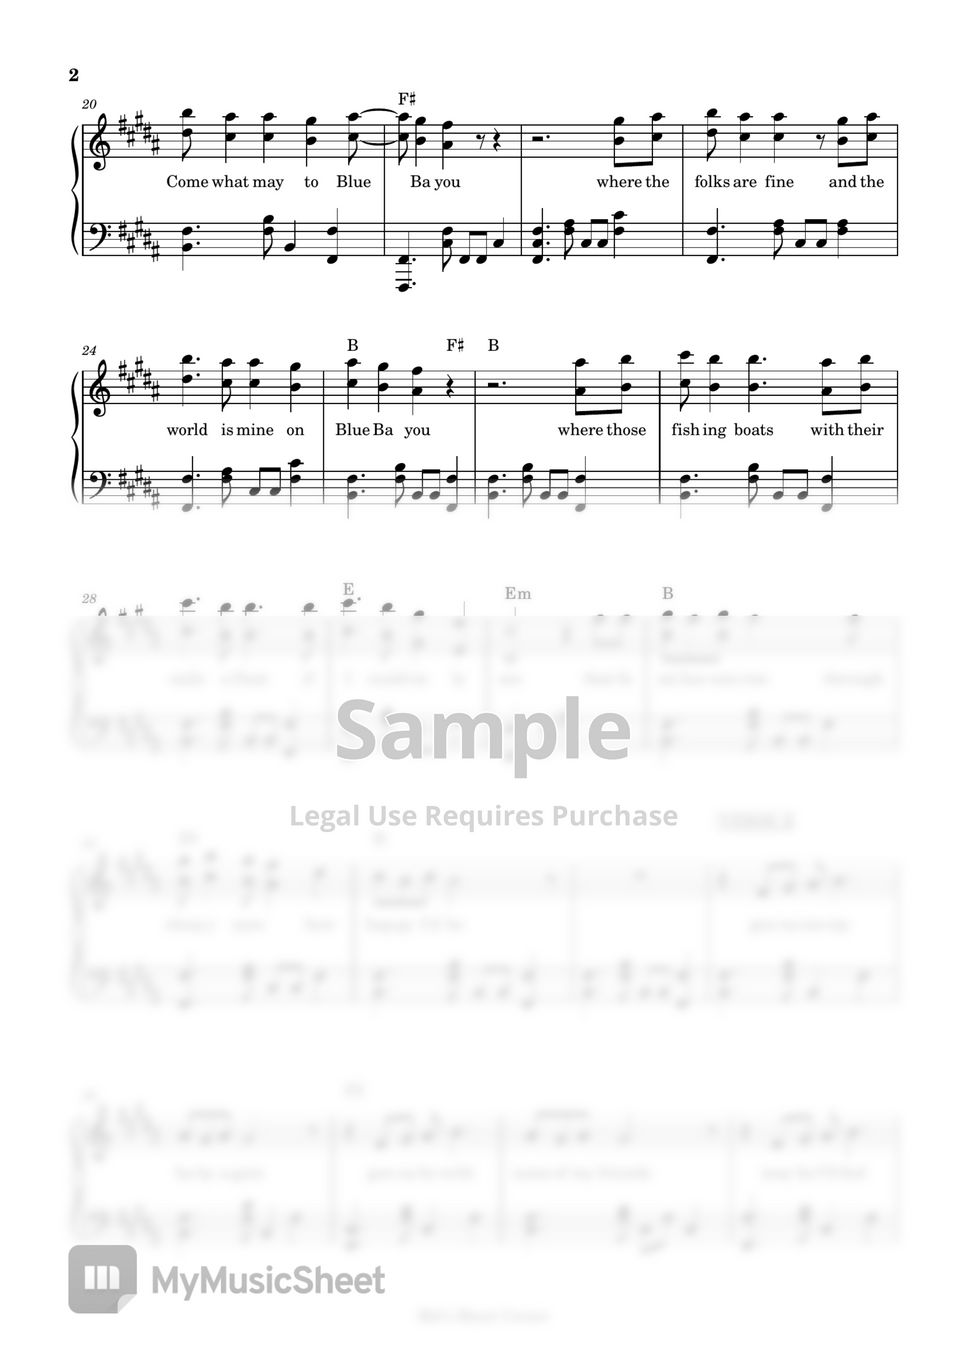 Linda Ronstadt - Blue Bayou (piano sheet music) by Mel's Music Corner